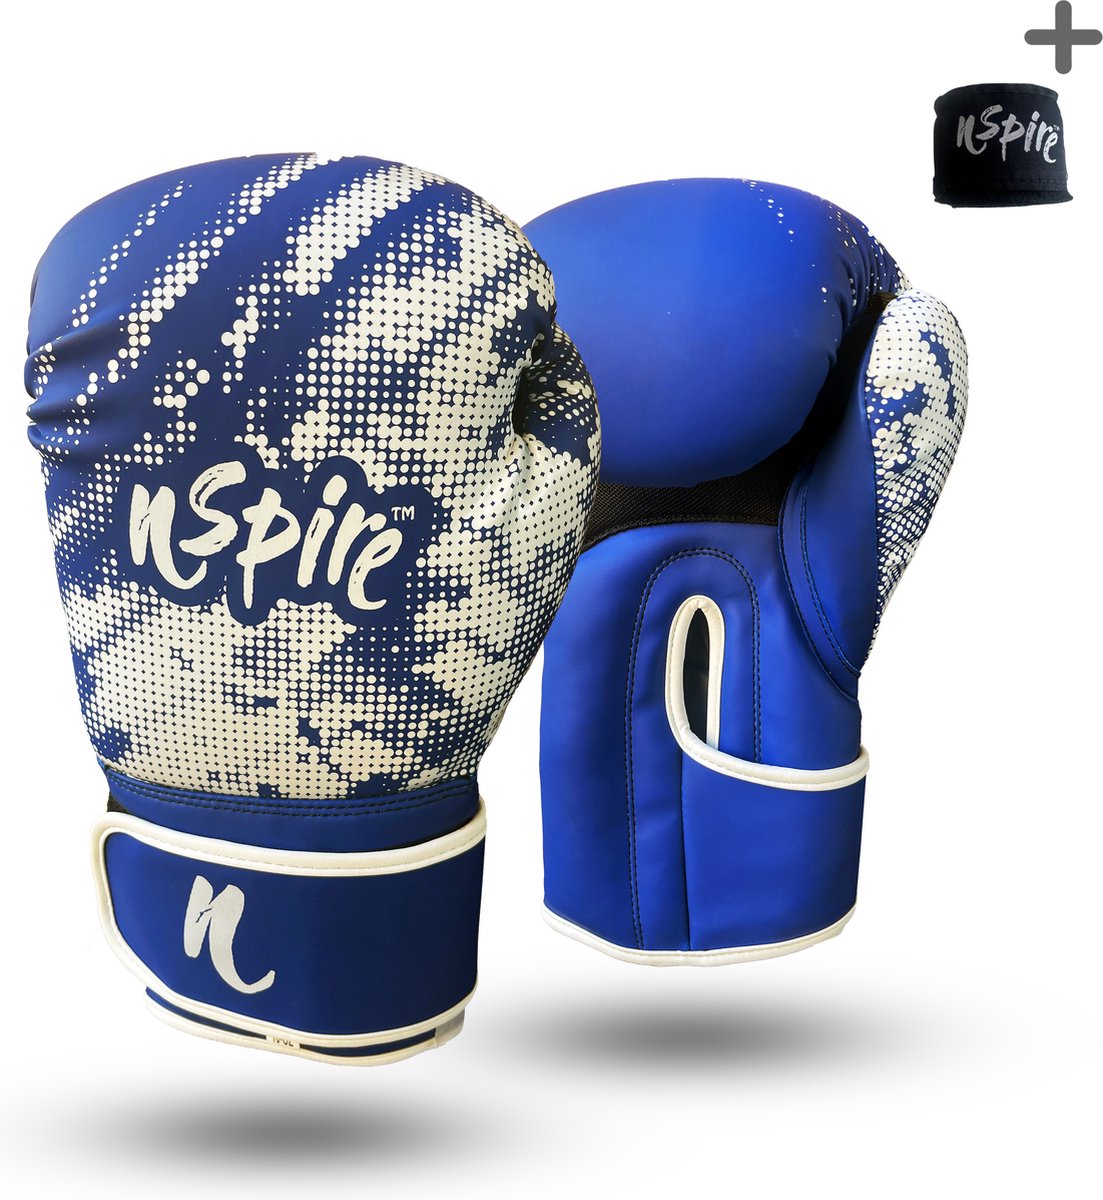 Nspire Sports : (kick) bokshandschoen - plus gratis bandage - Blauw 14 oz